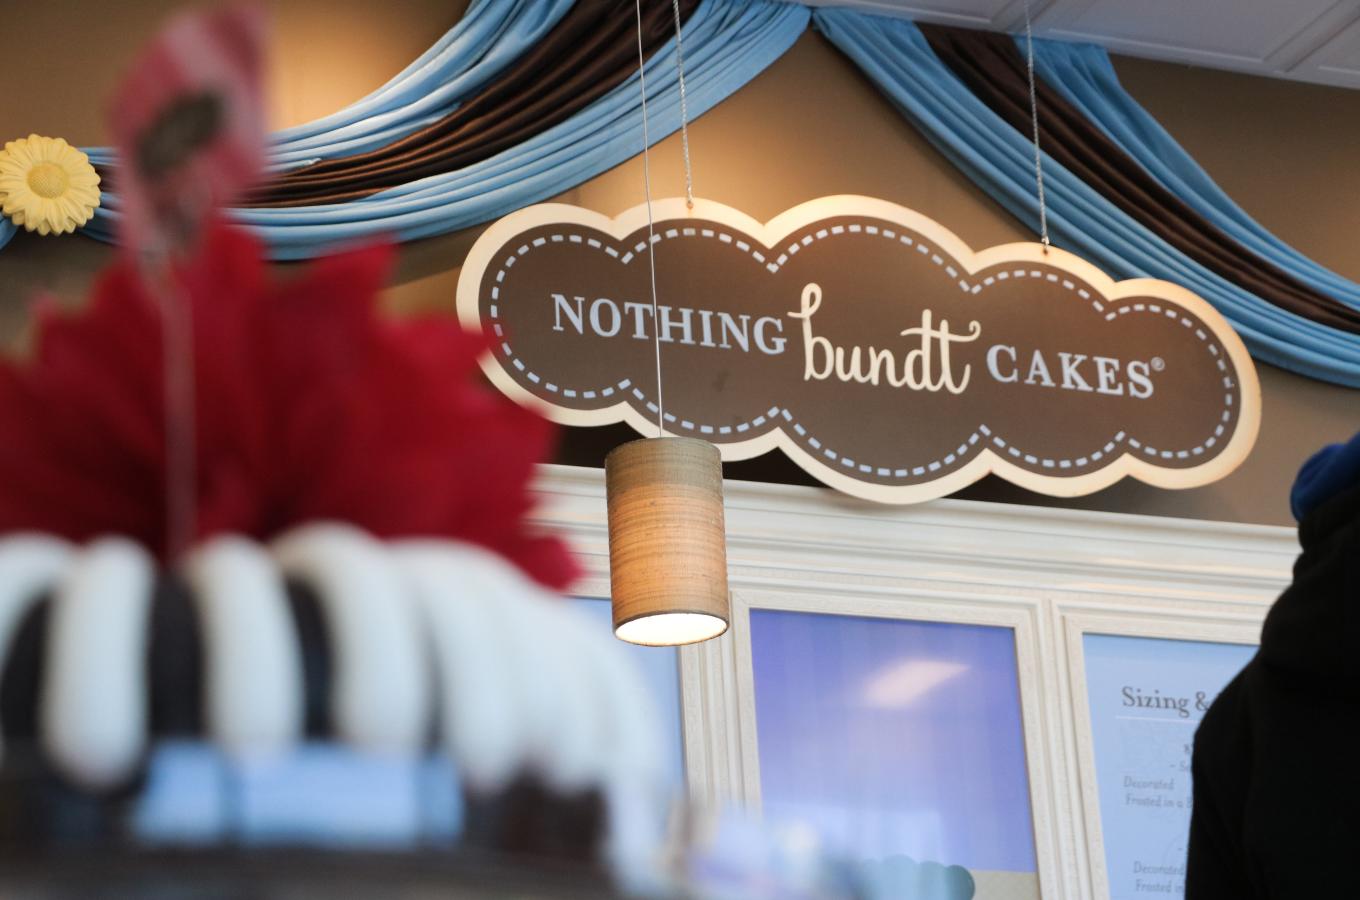 Banana Pudding Bundt Cake - Baked Goods - Sweet Tooth Snack Shop - Bakery |  Houston, TX